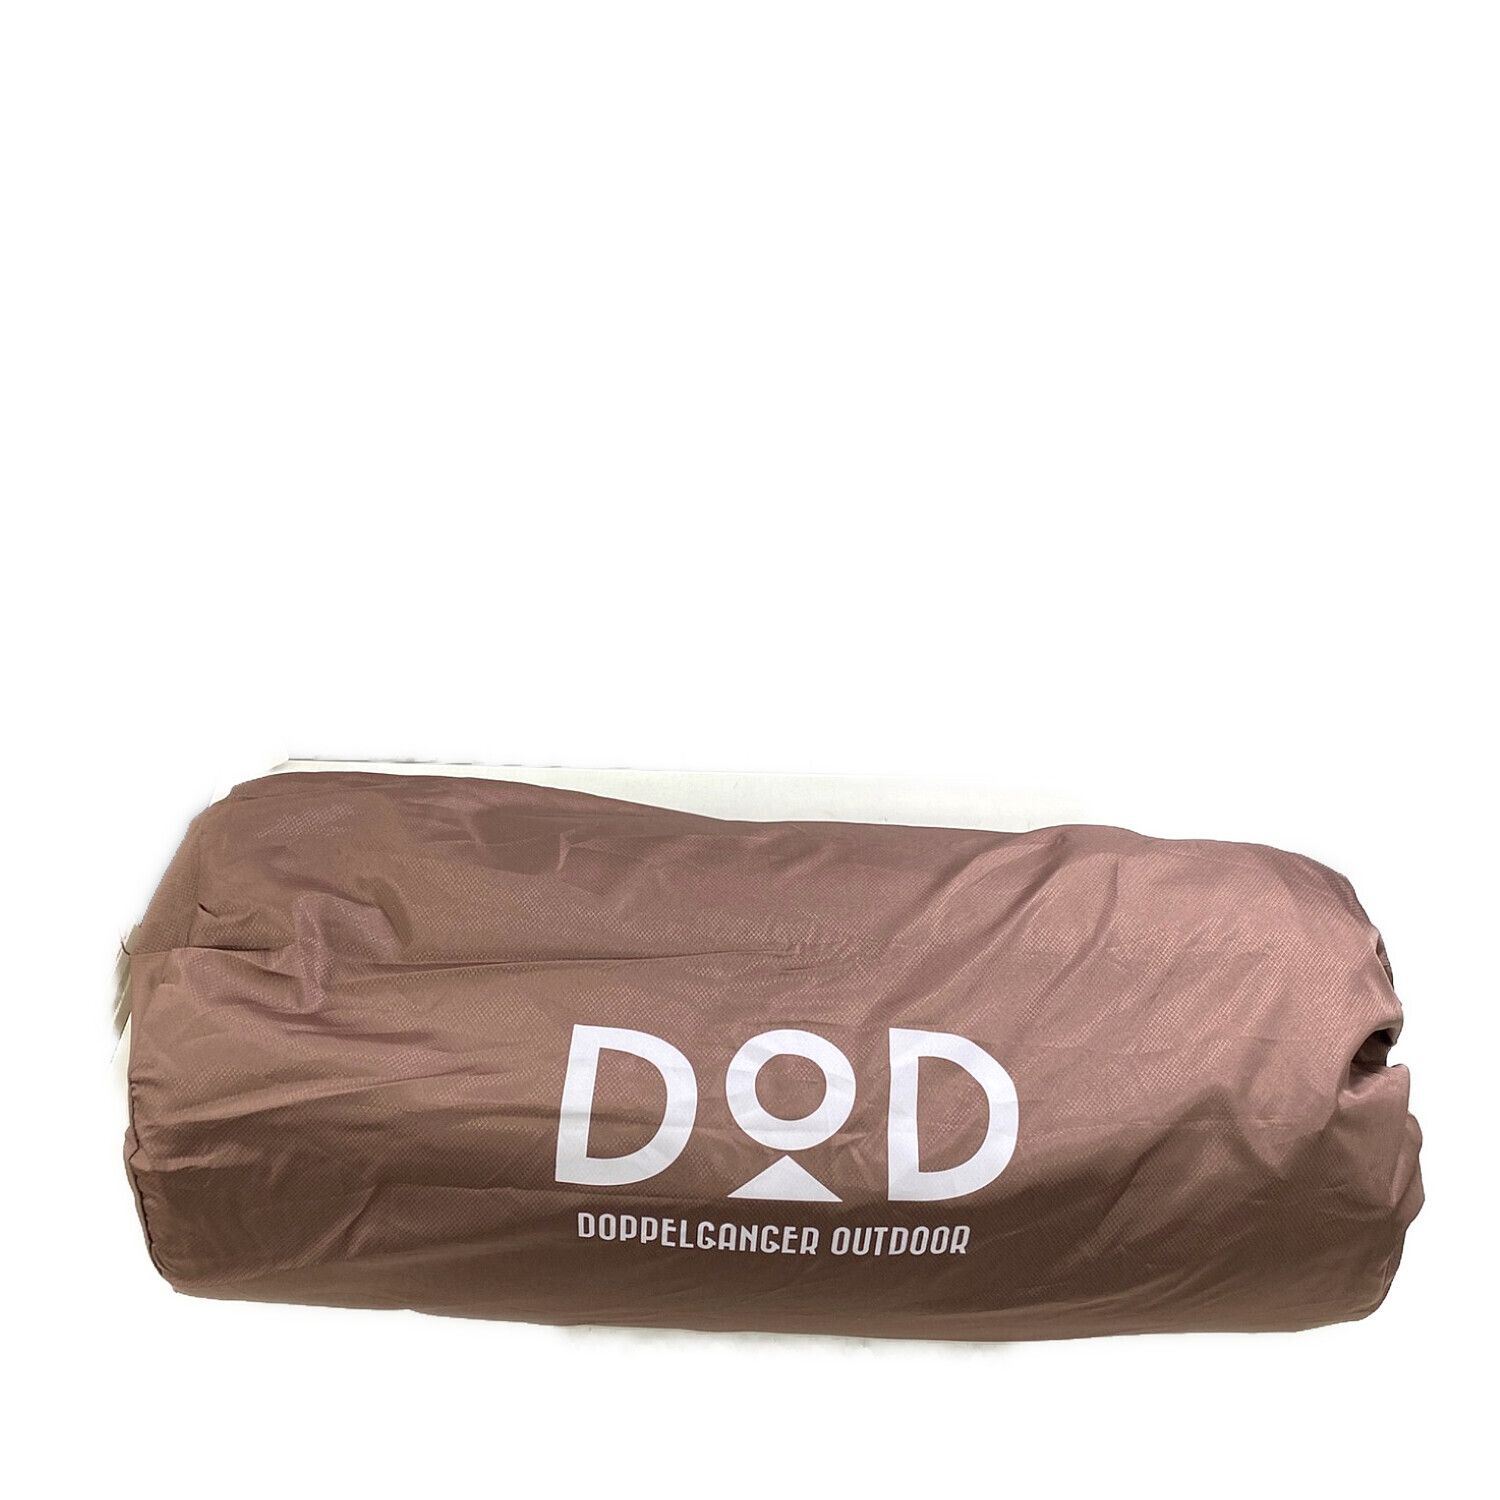 DoD 丸洗いシーツエアマット - 寝袋/寝具